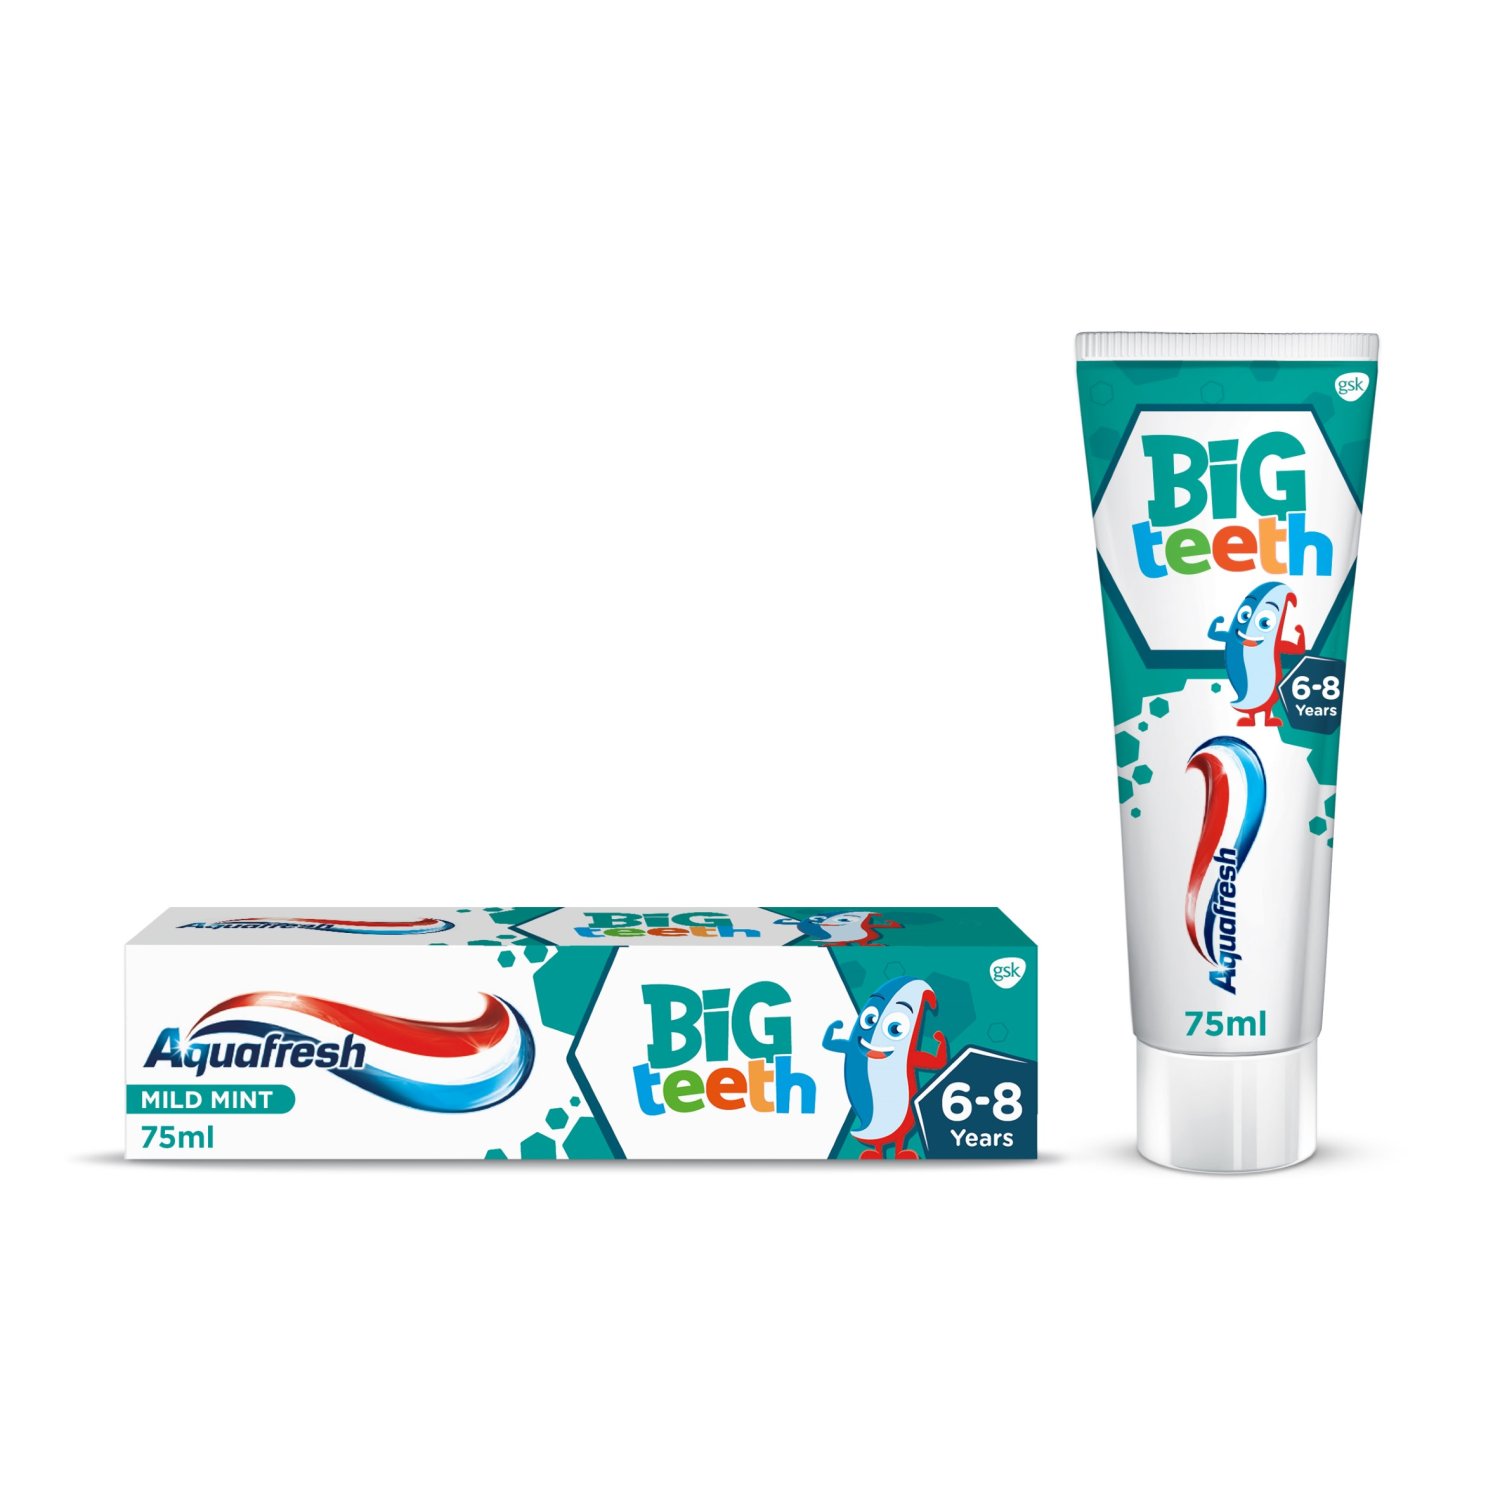 Aquafresh Big Teeth Toothpaste for Kids 6-8 Years (75 ml)